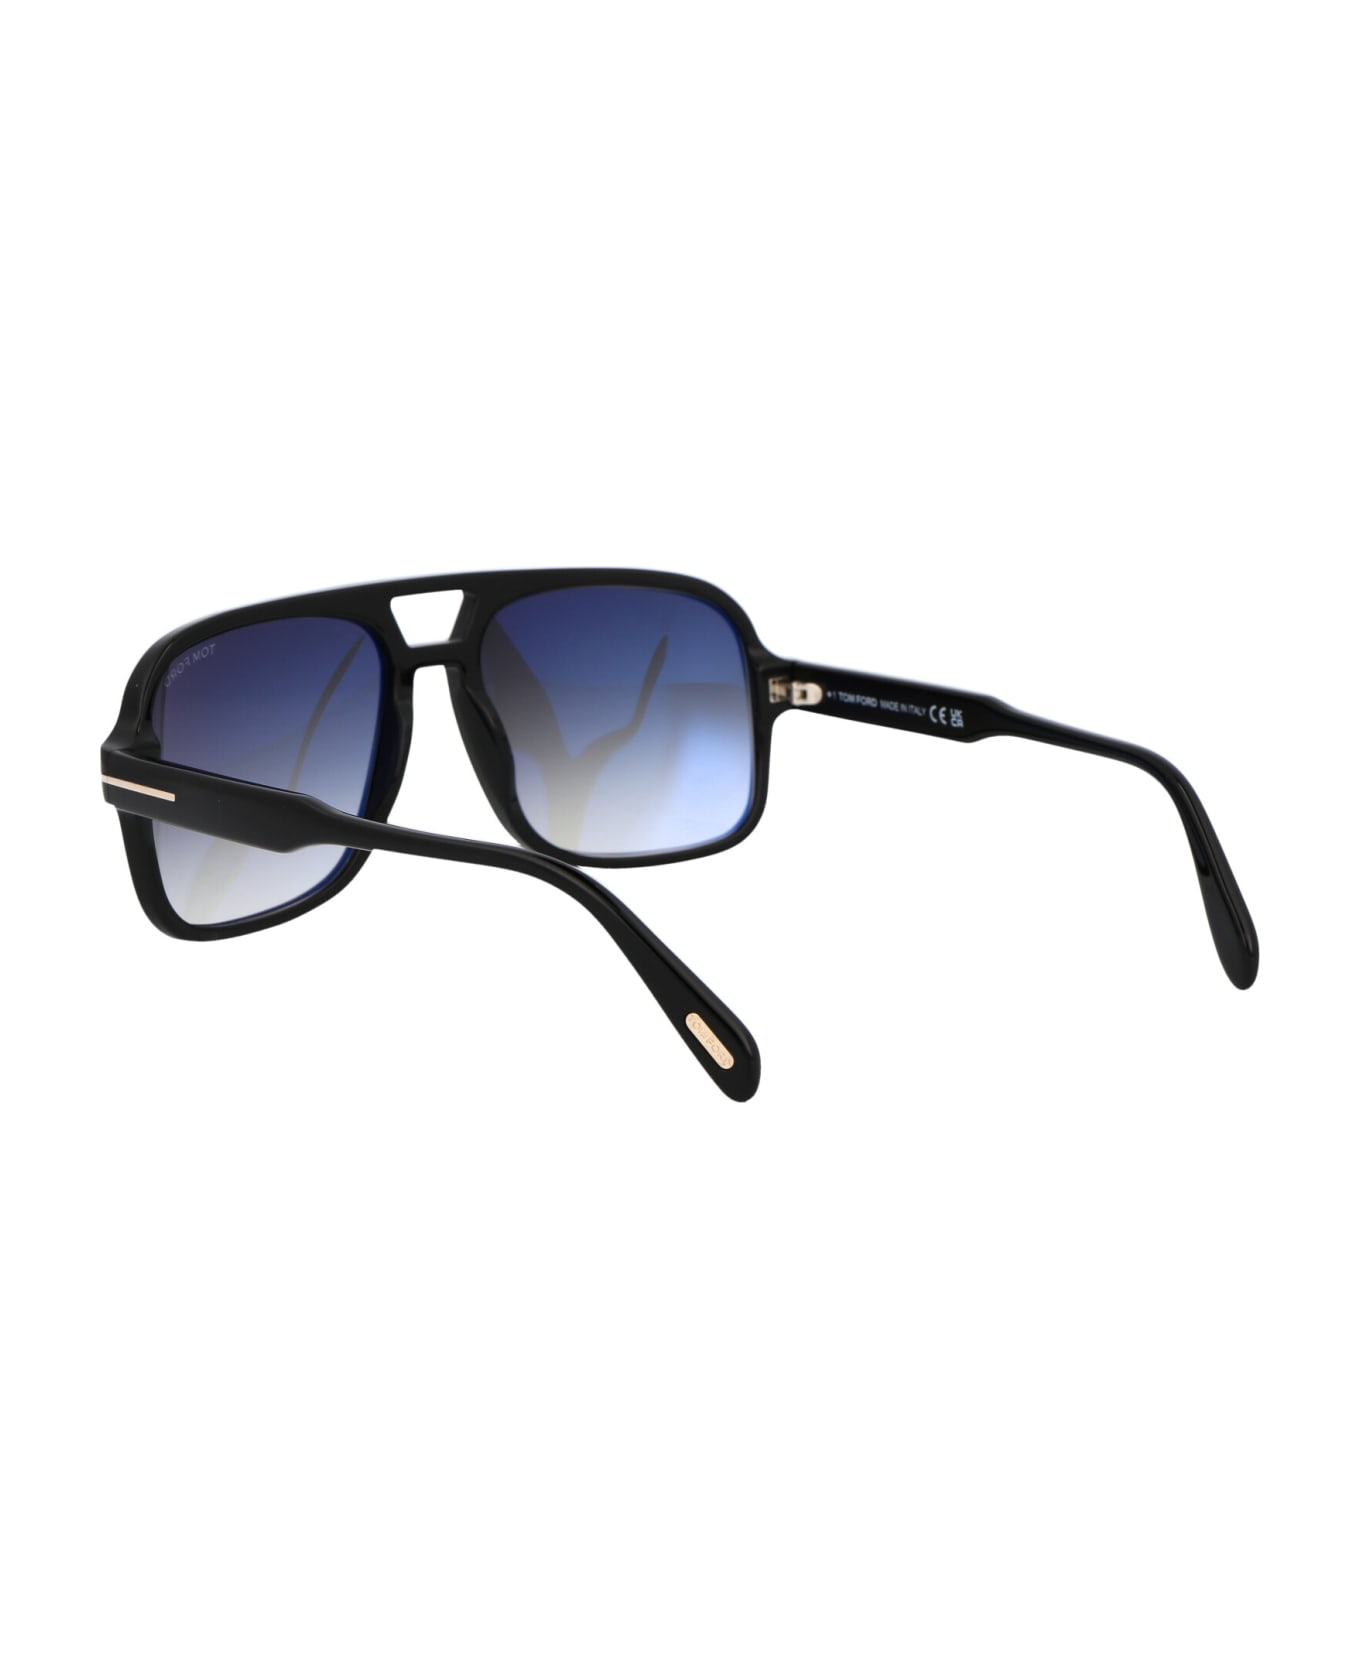 Tom Ford Eyewear Falconer-02 Sunglasses - 01B Nero Lucido / Fumo Grad